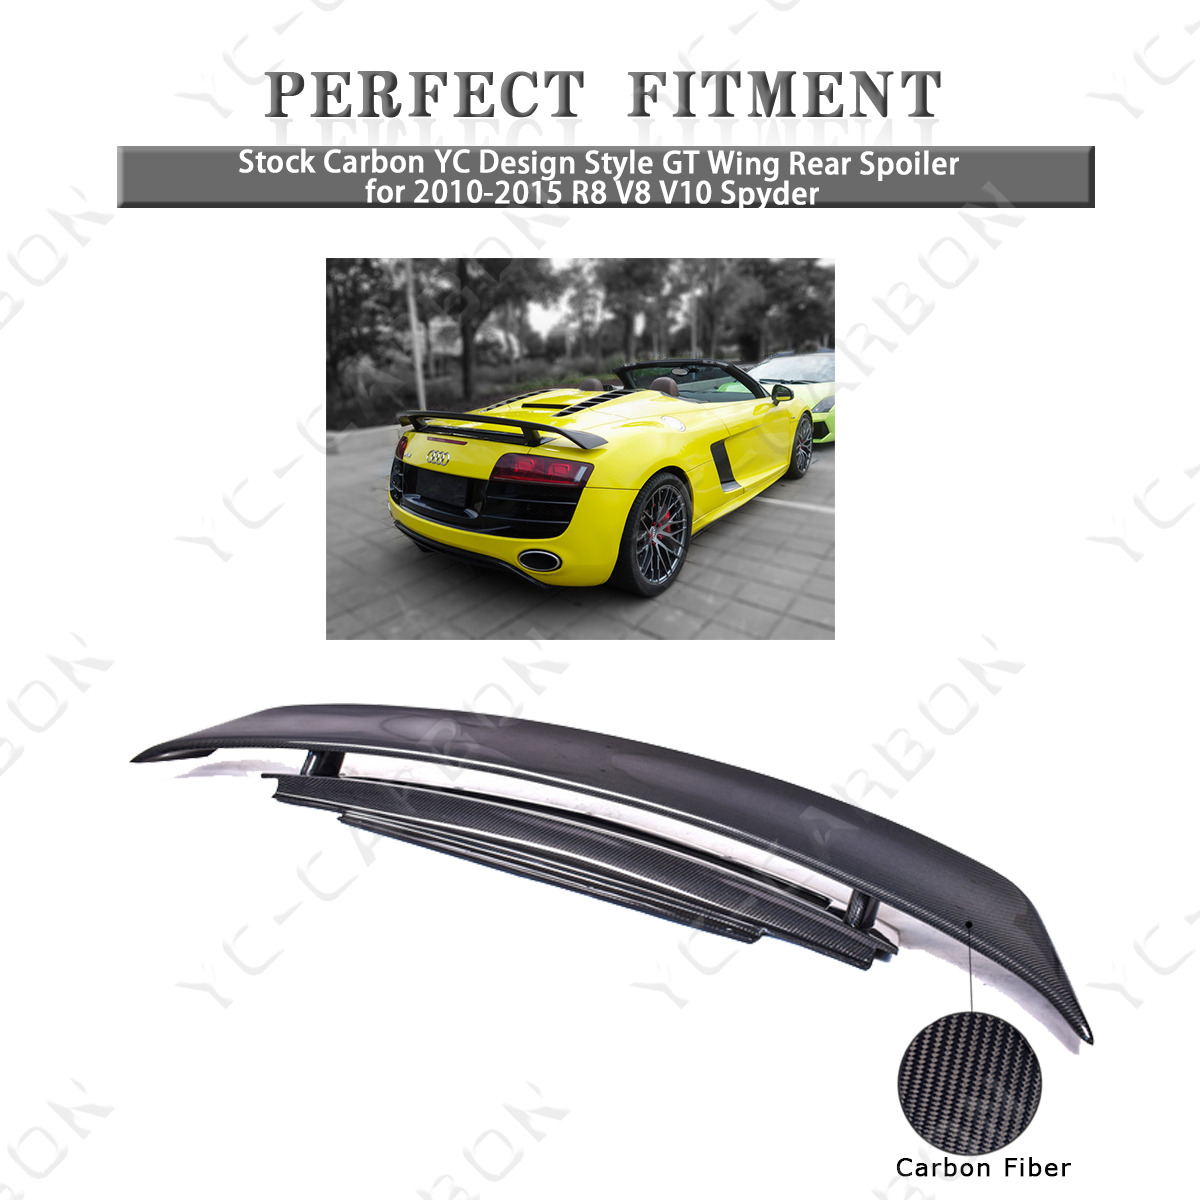 Stock Carbon YC Design Style GT Wing Rear Spoiler for 2010-2015 R8 V8 V10 Spyder